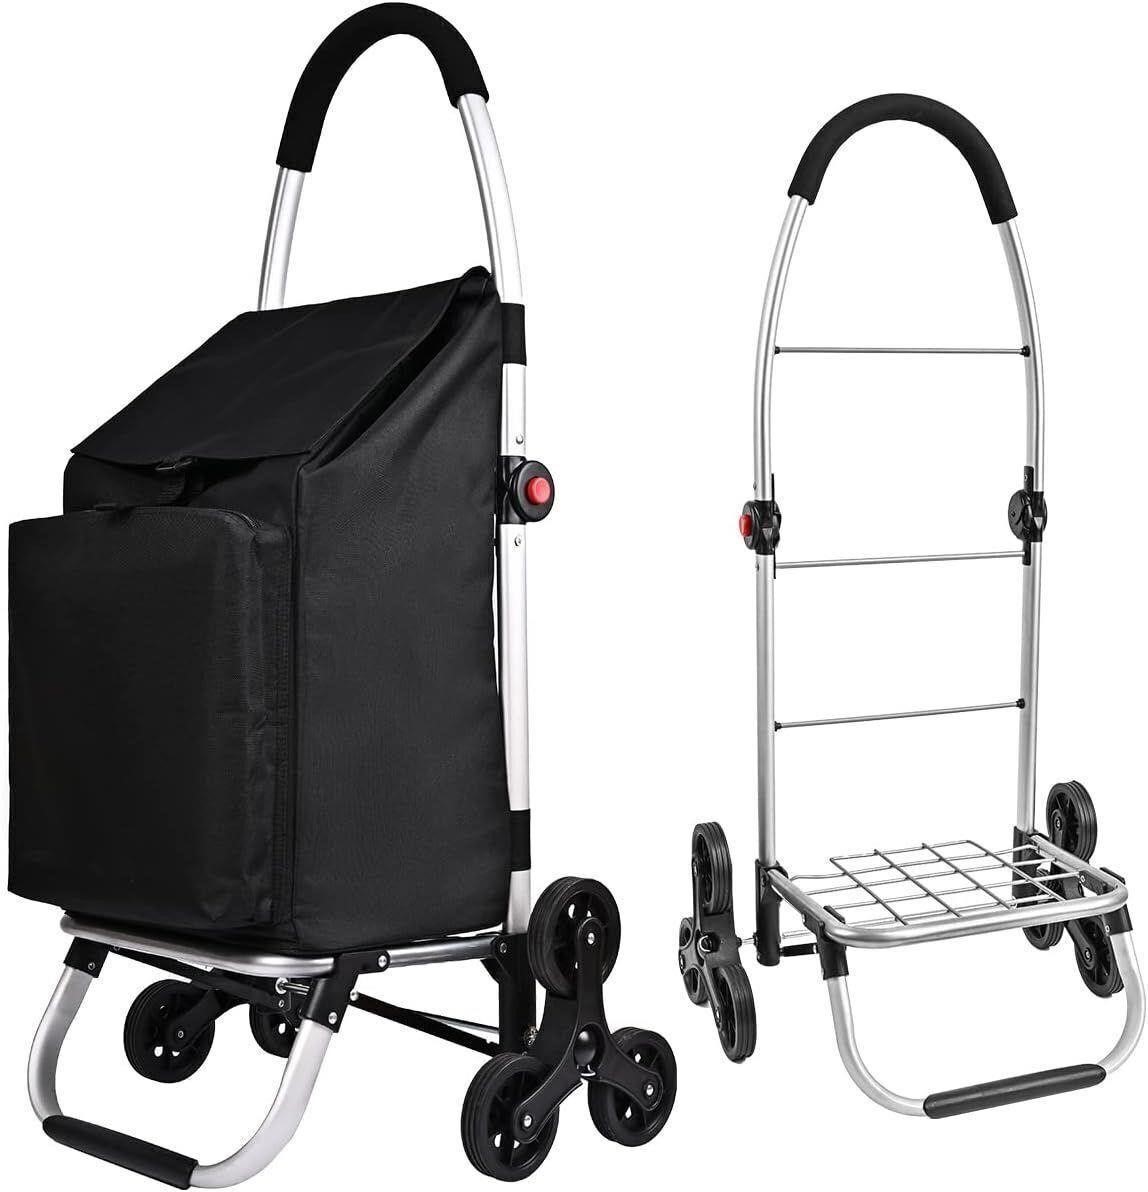 $80 Foldable Shopping Cart (Black)